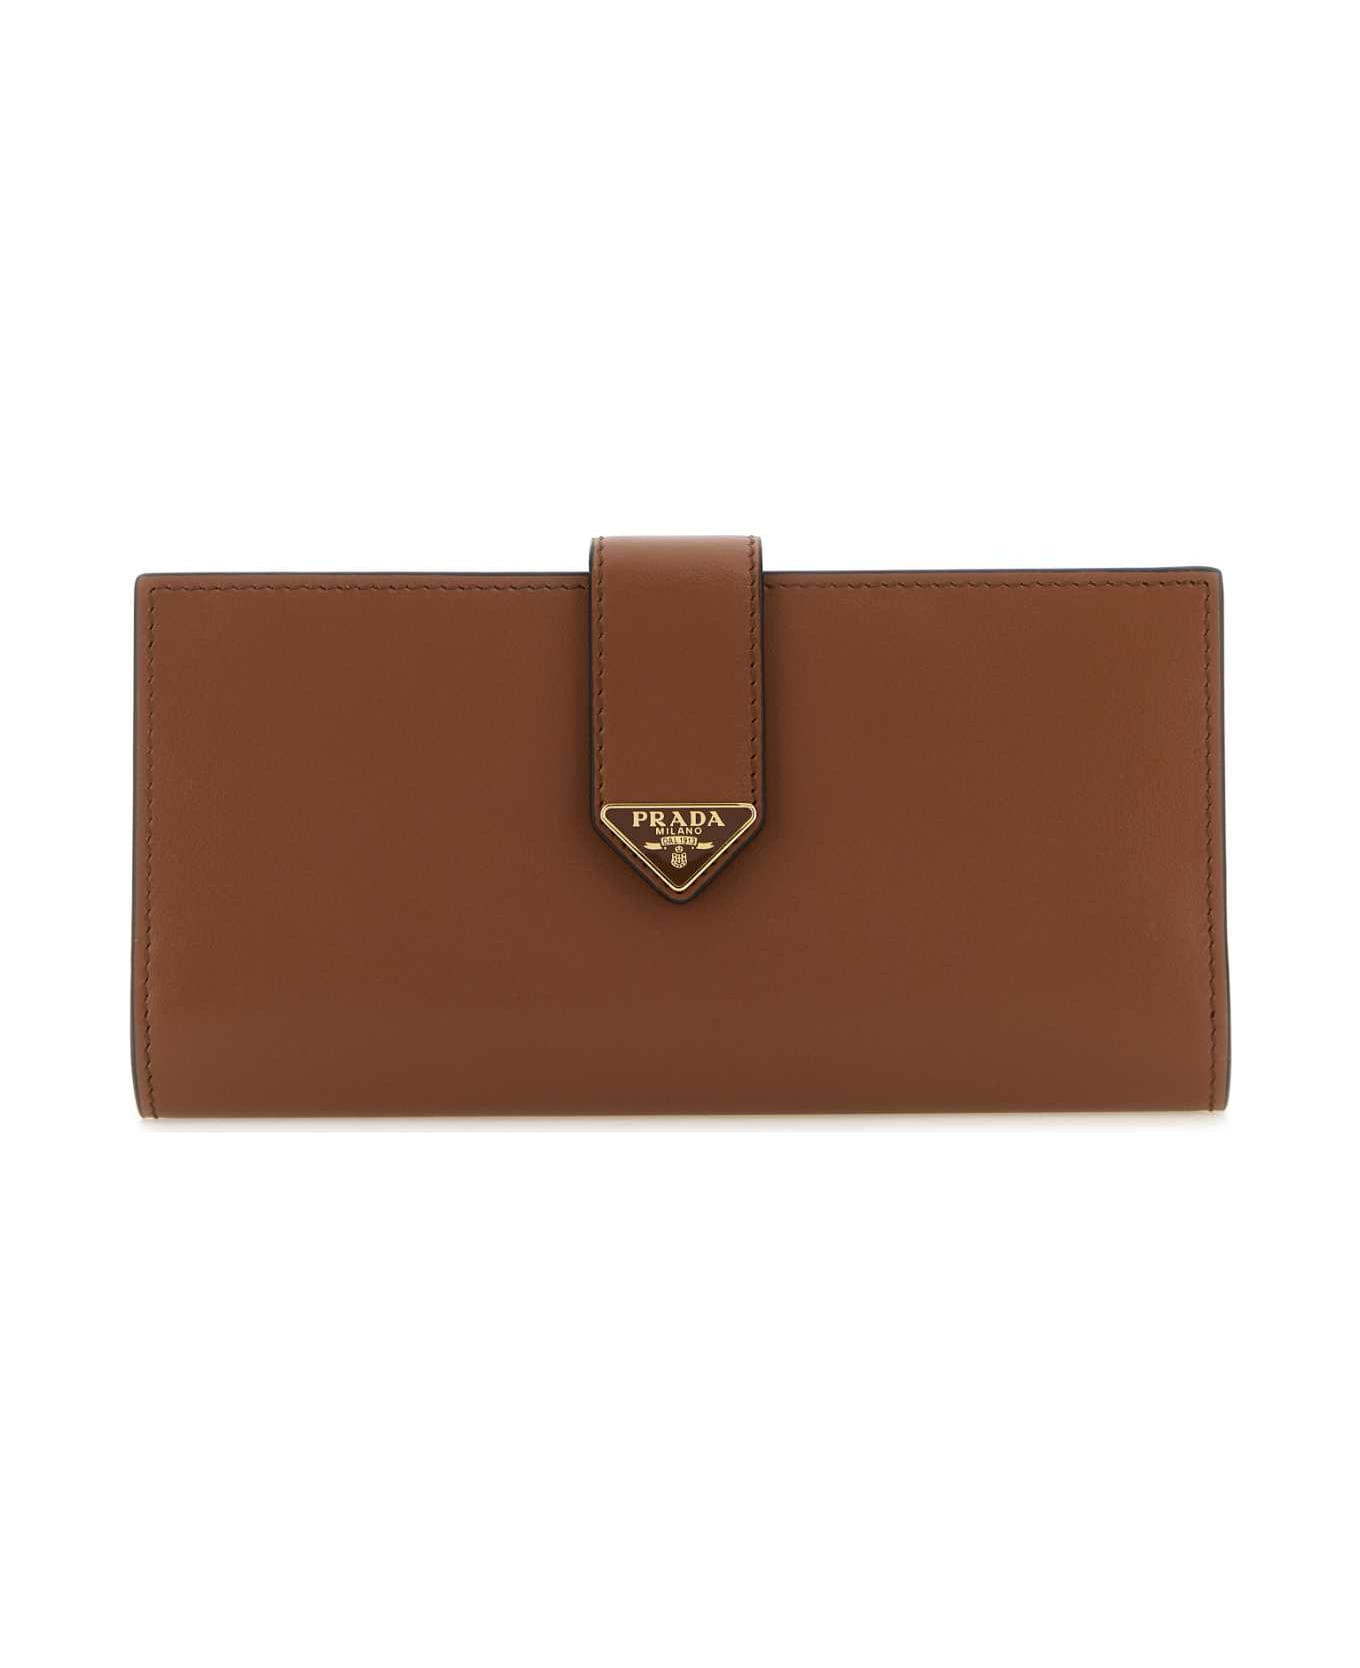 Prada Brown Leather Large Wallet - COGNAC